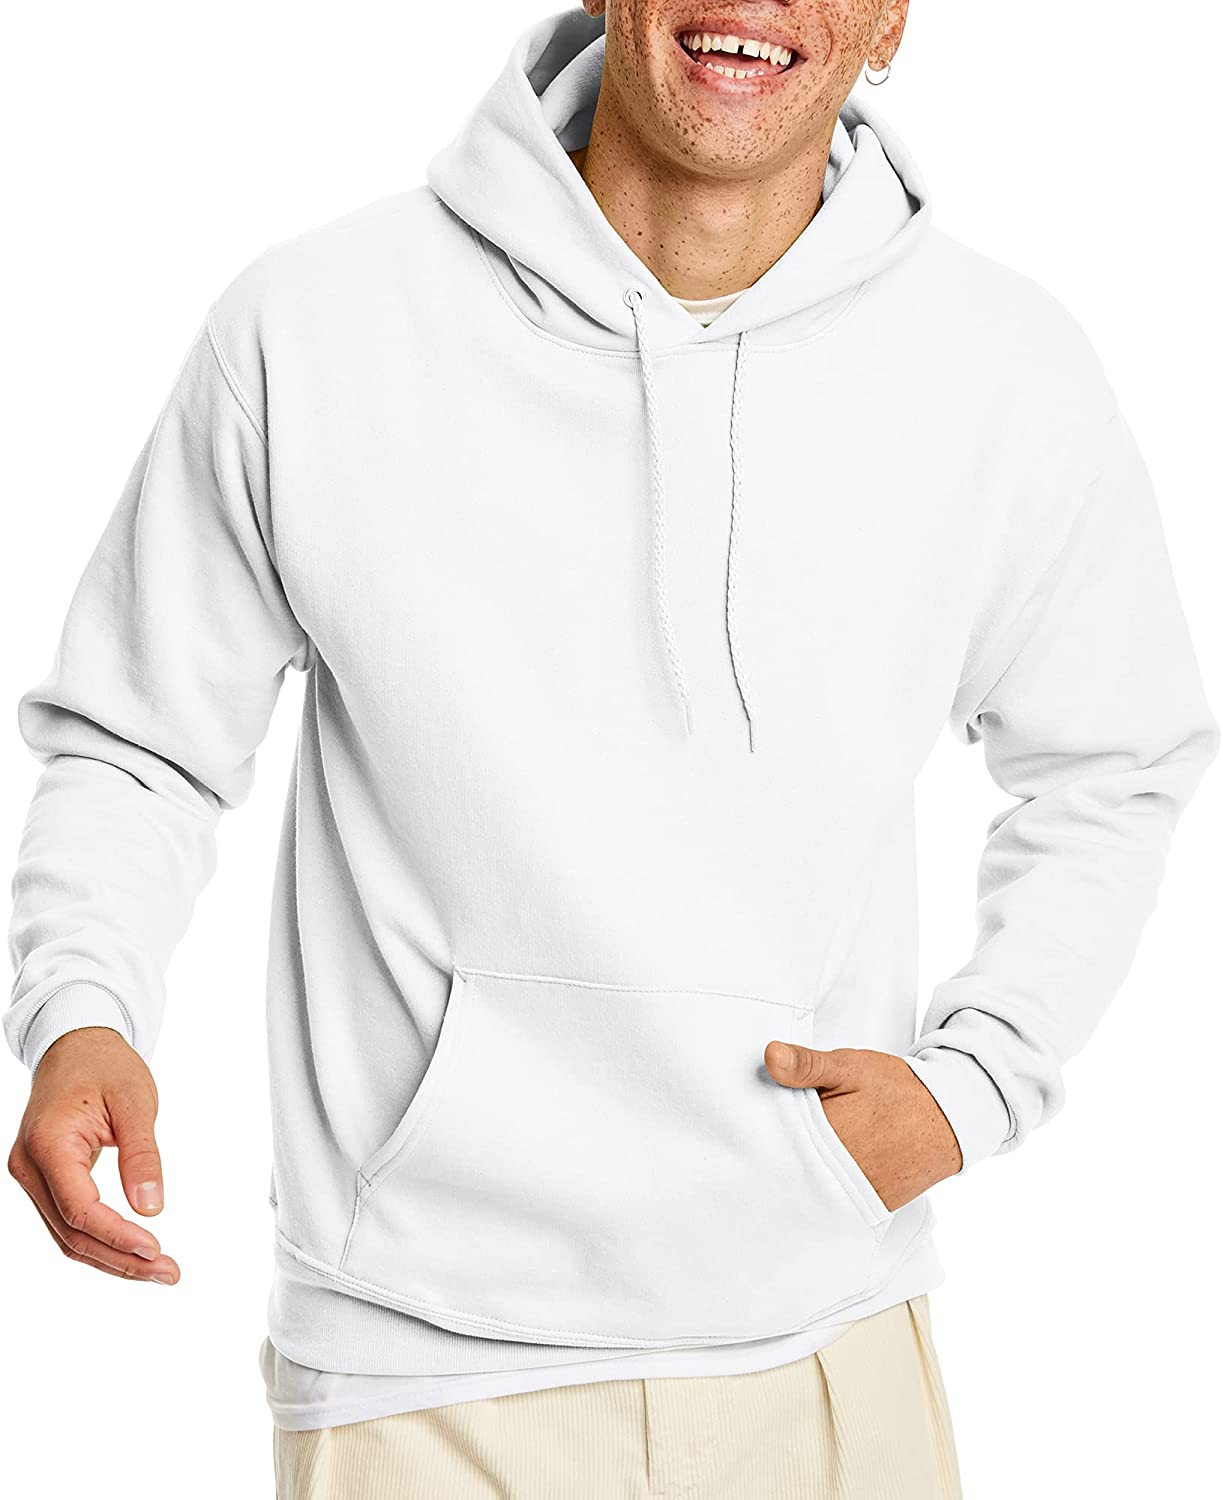 1 White Hanes P170 Mens EcoSmart Hooded Sweatshirt Medium 1 Pale Pink